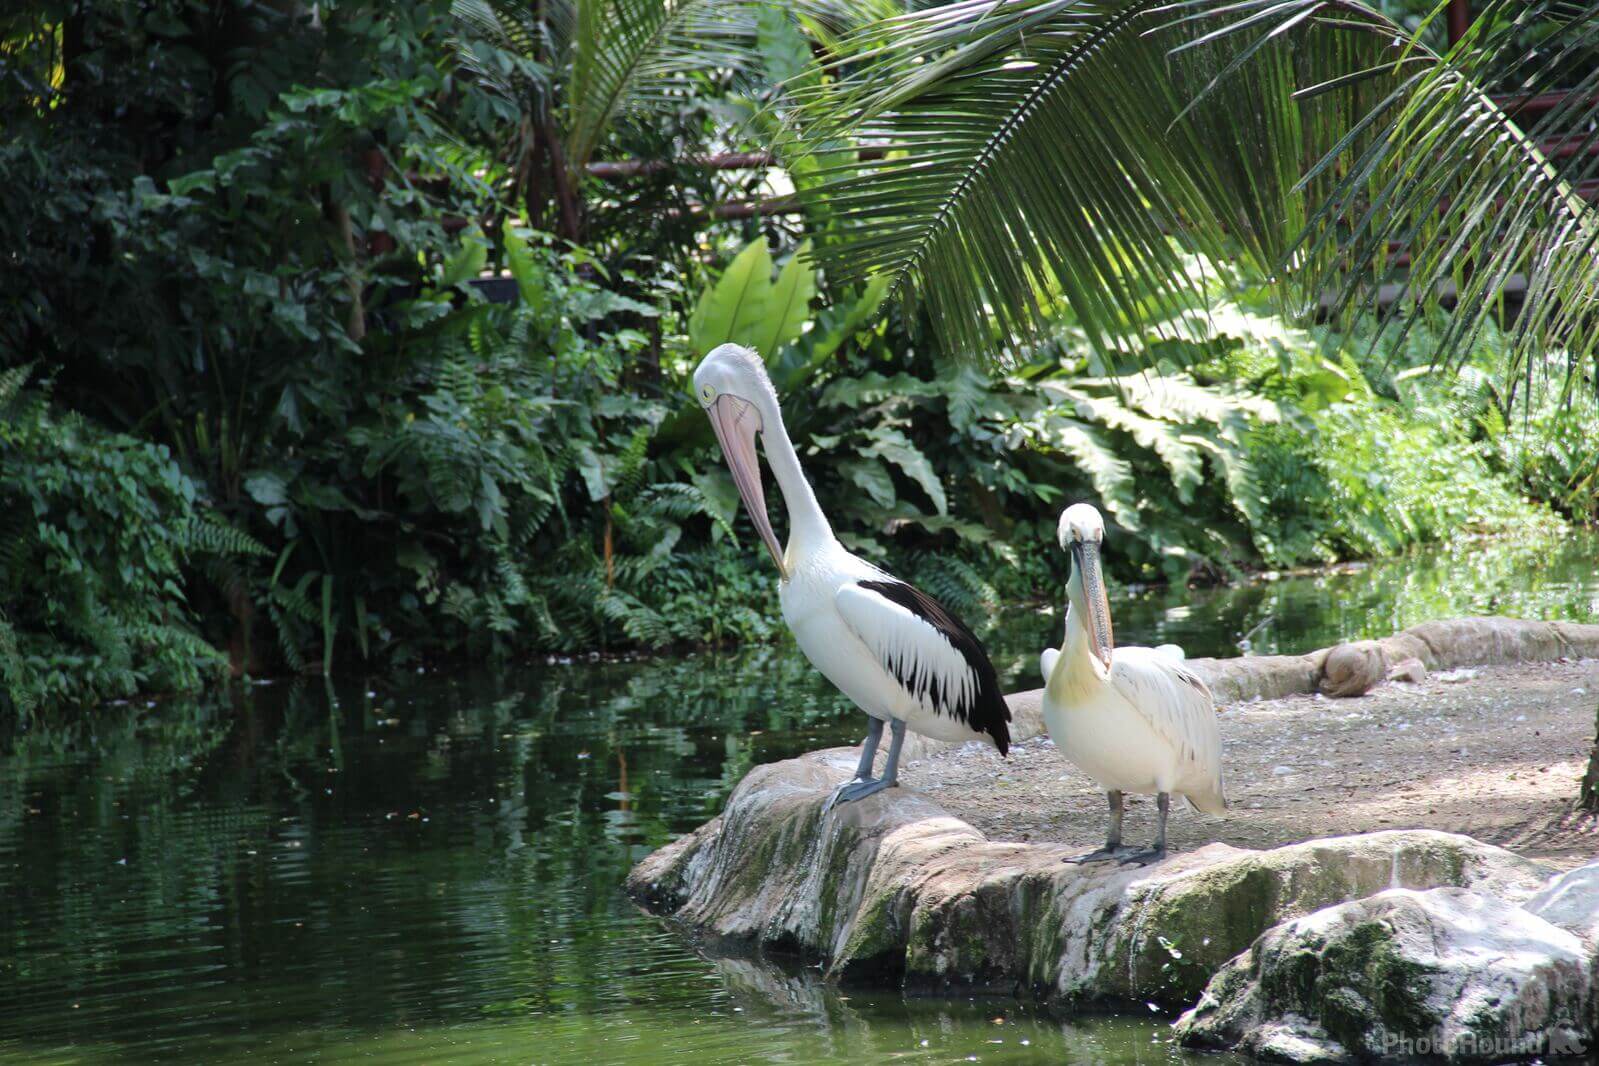 Image of Bali Bird Park by Team PhotoHound